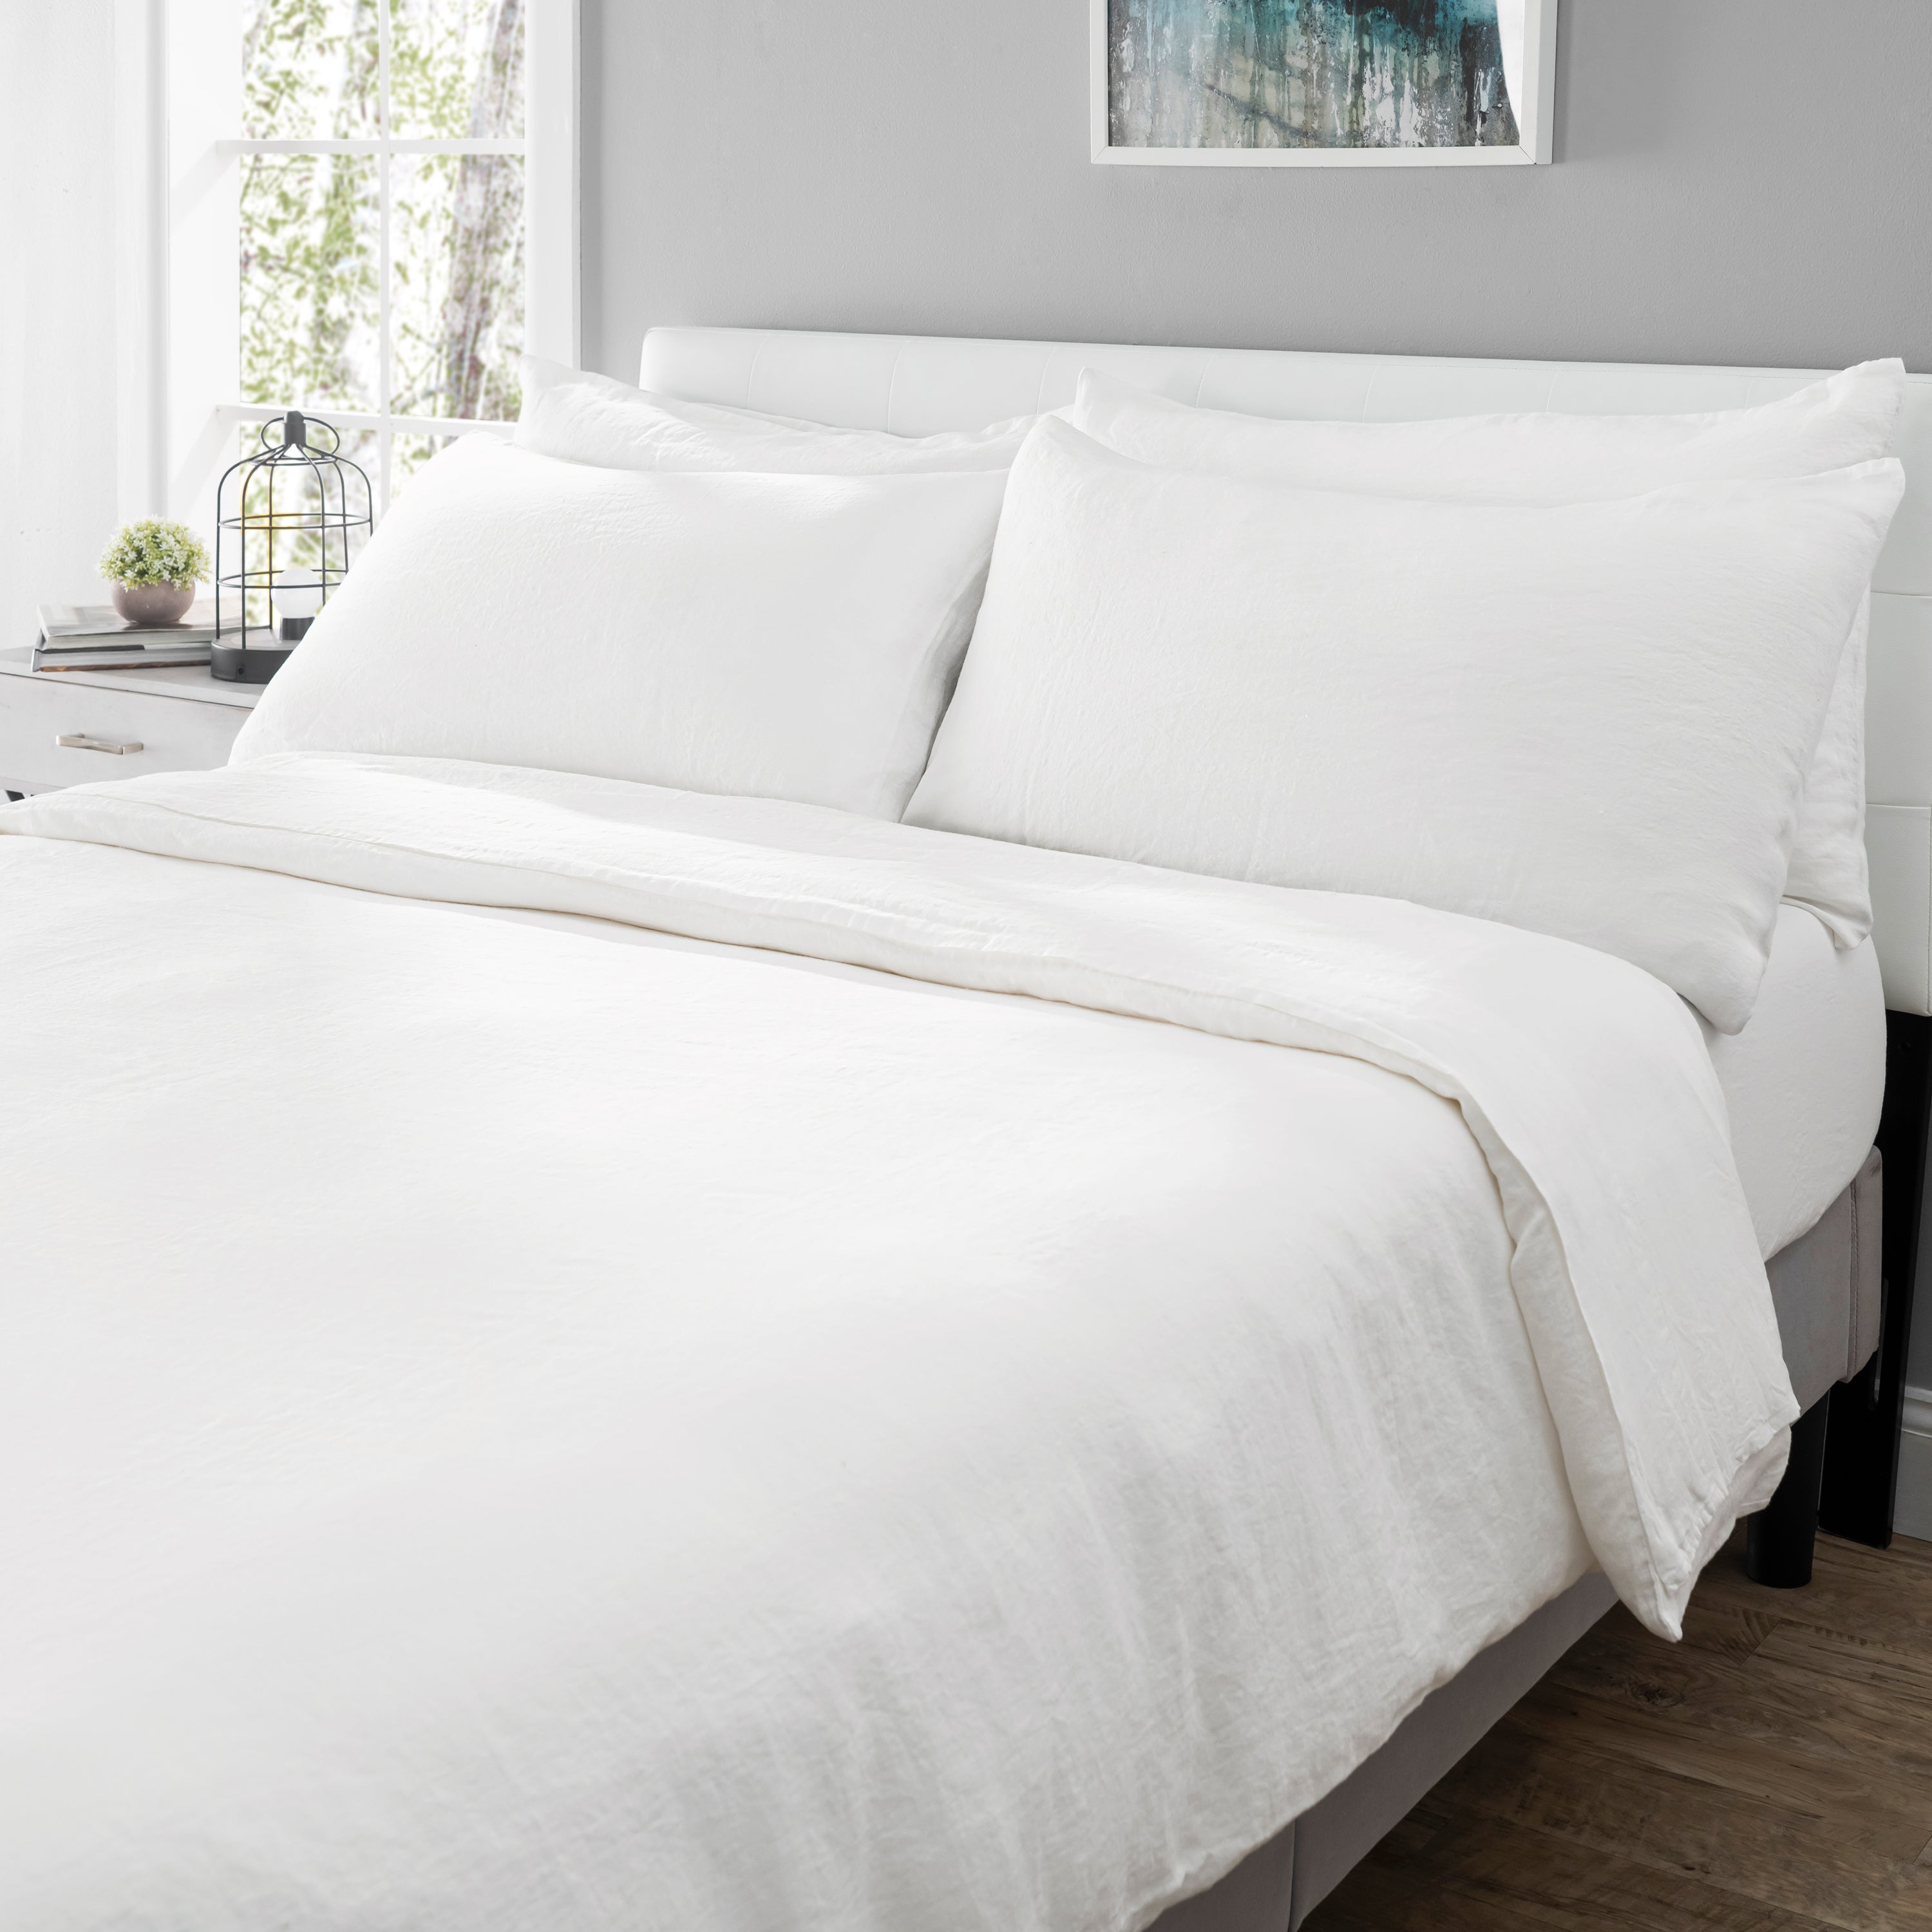 100% Organic Hemp Bed Sheet Collection